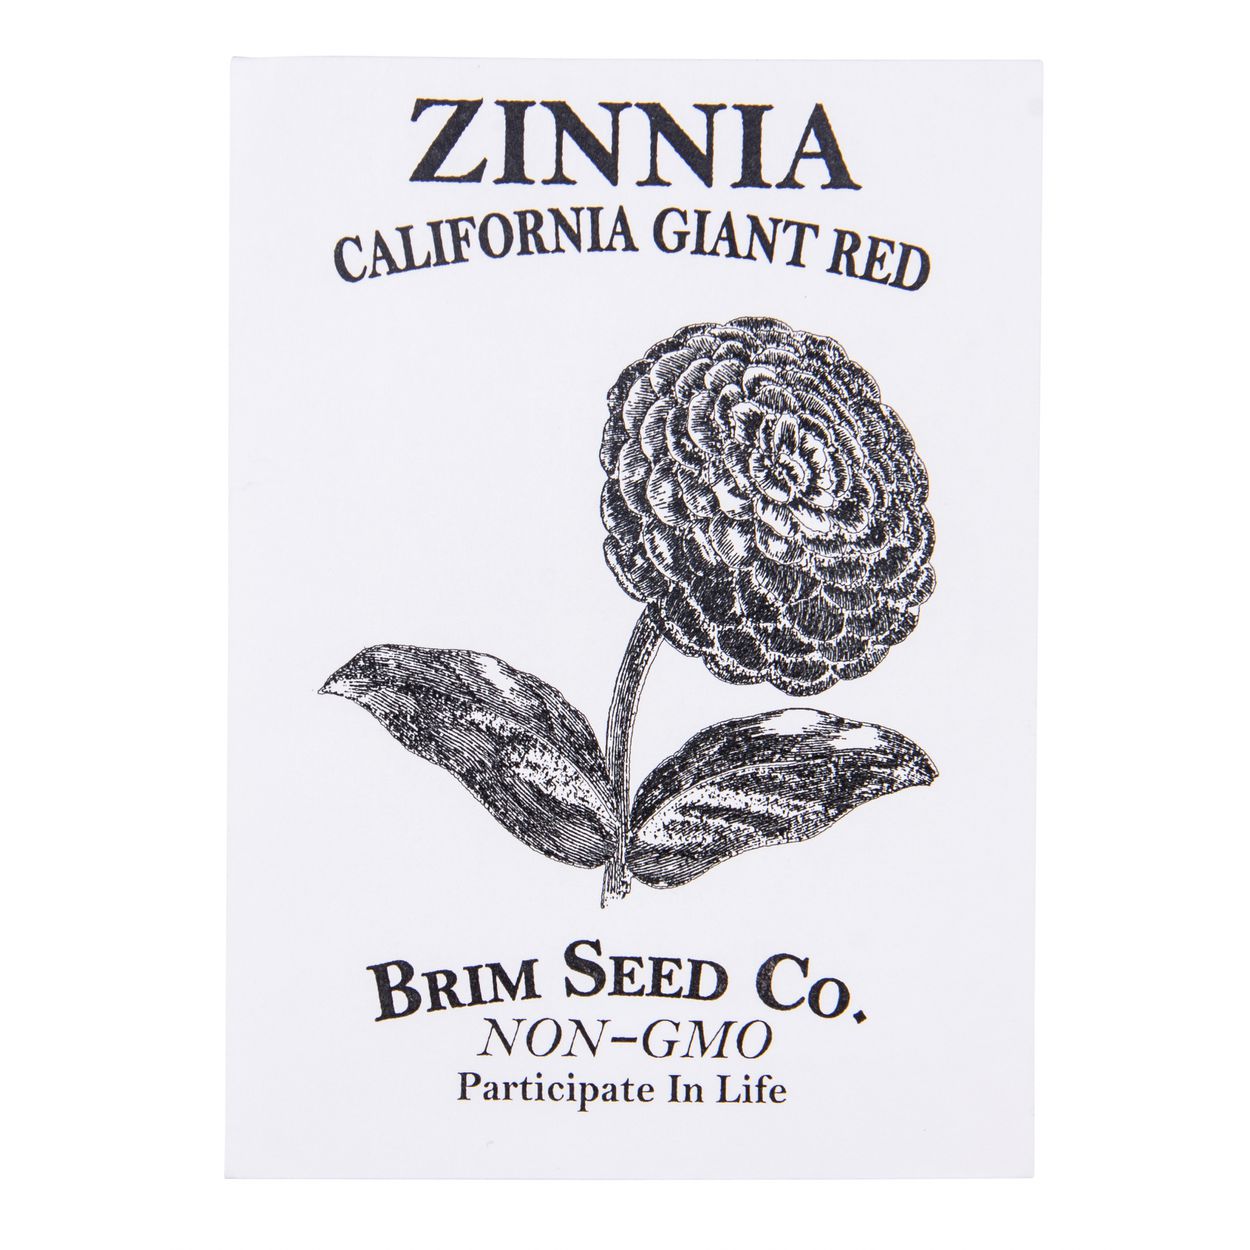 Brim Seed Co. - California Giant Red Zinnia Flower Seed